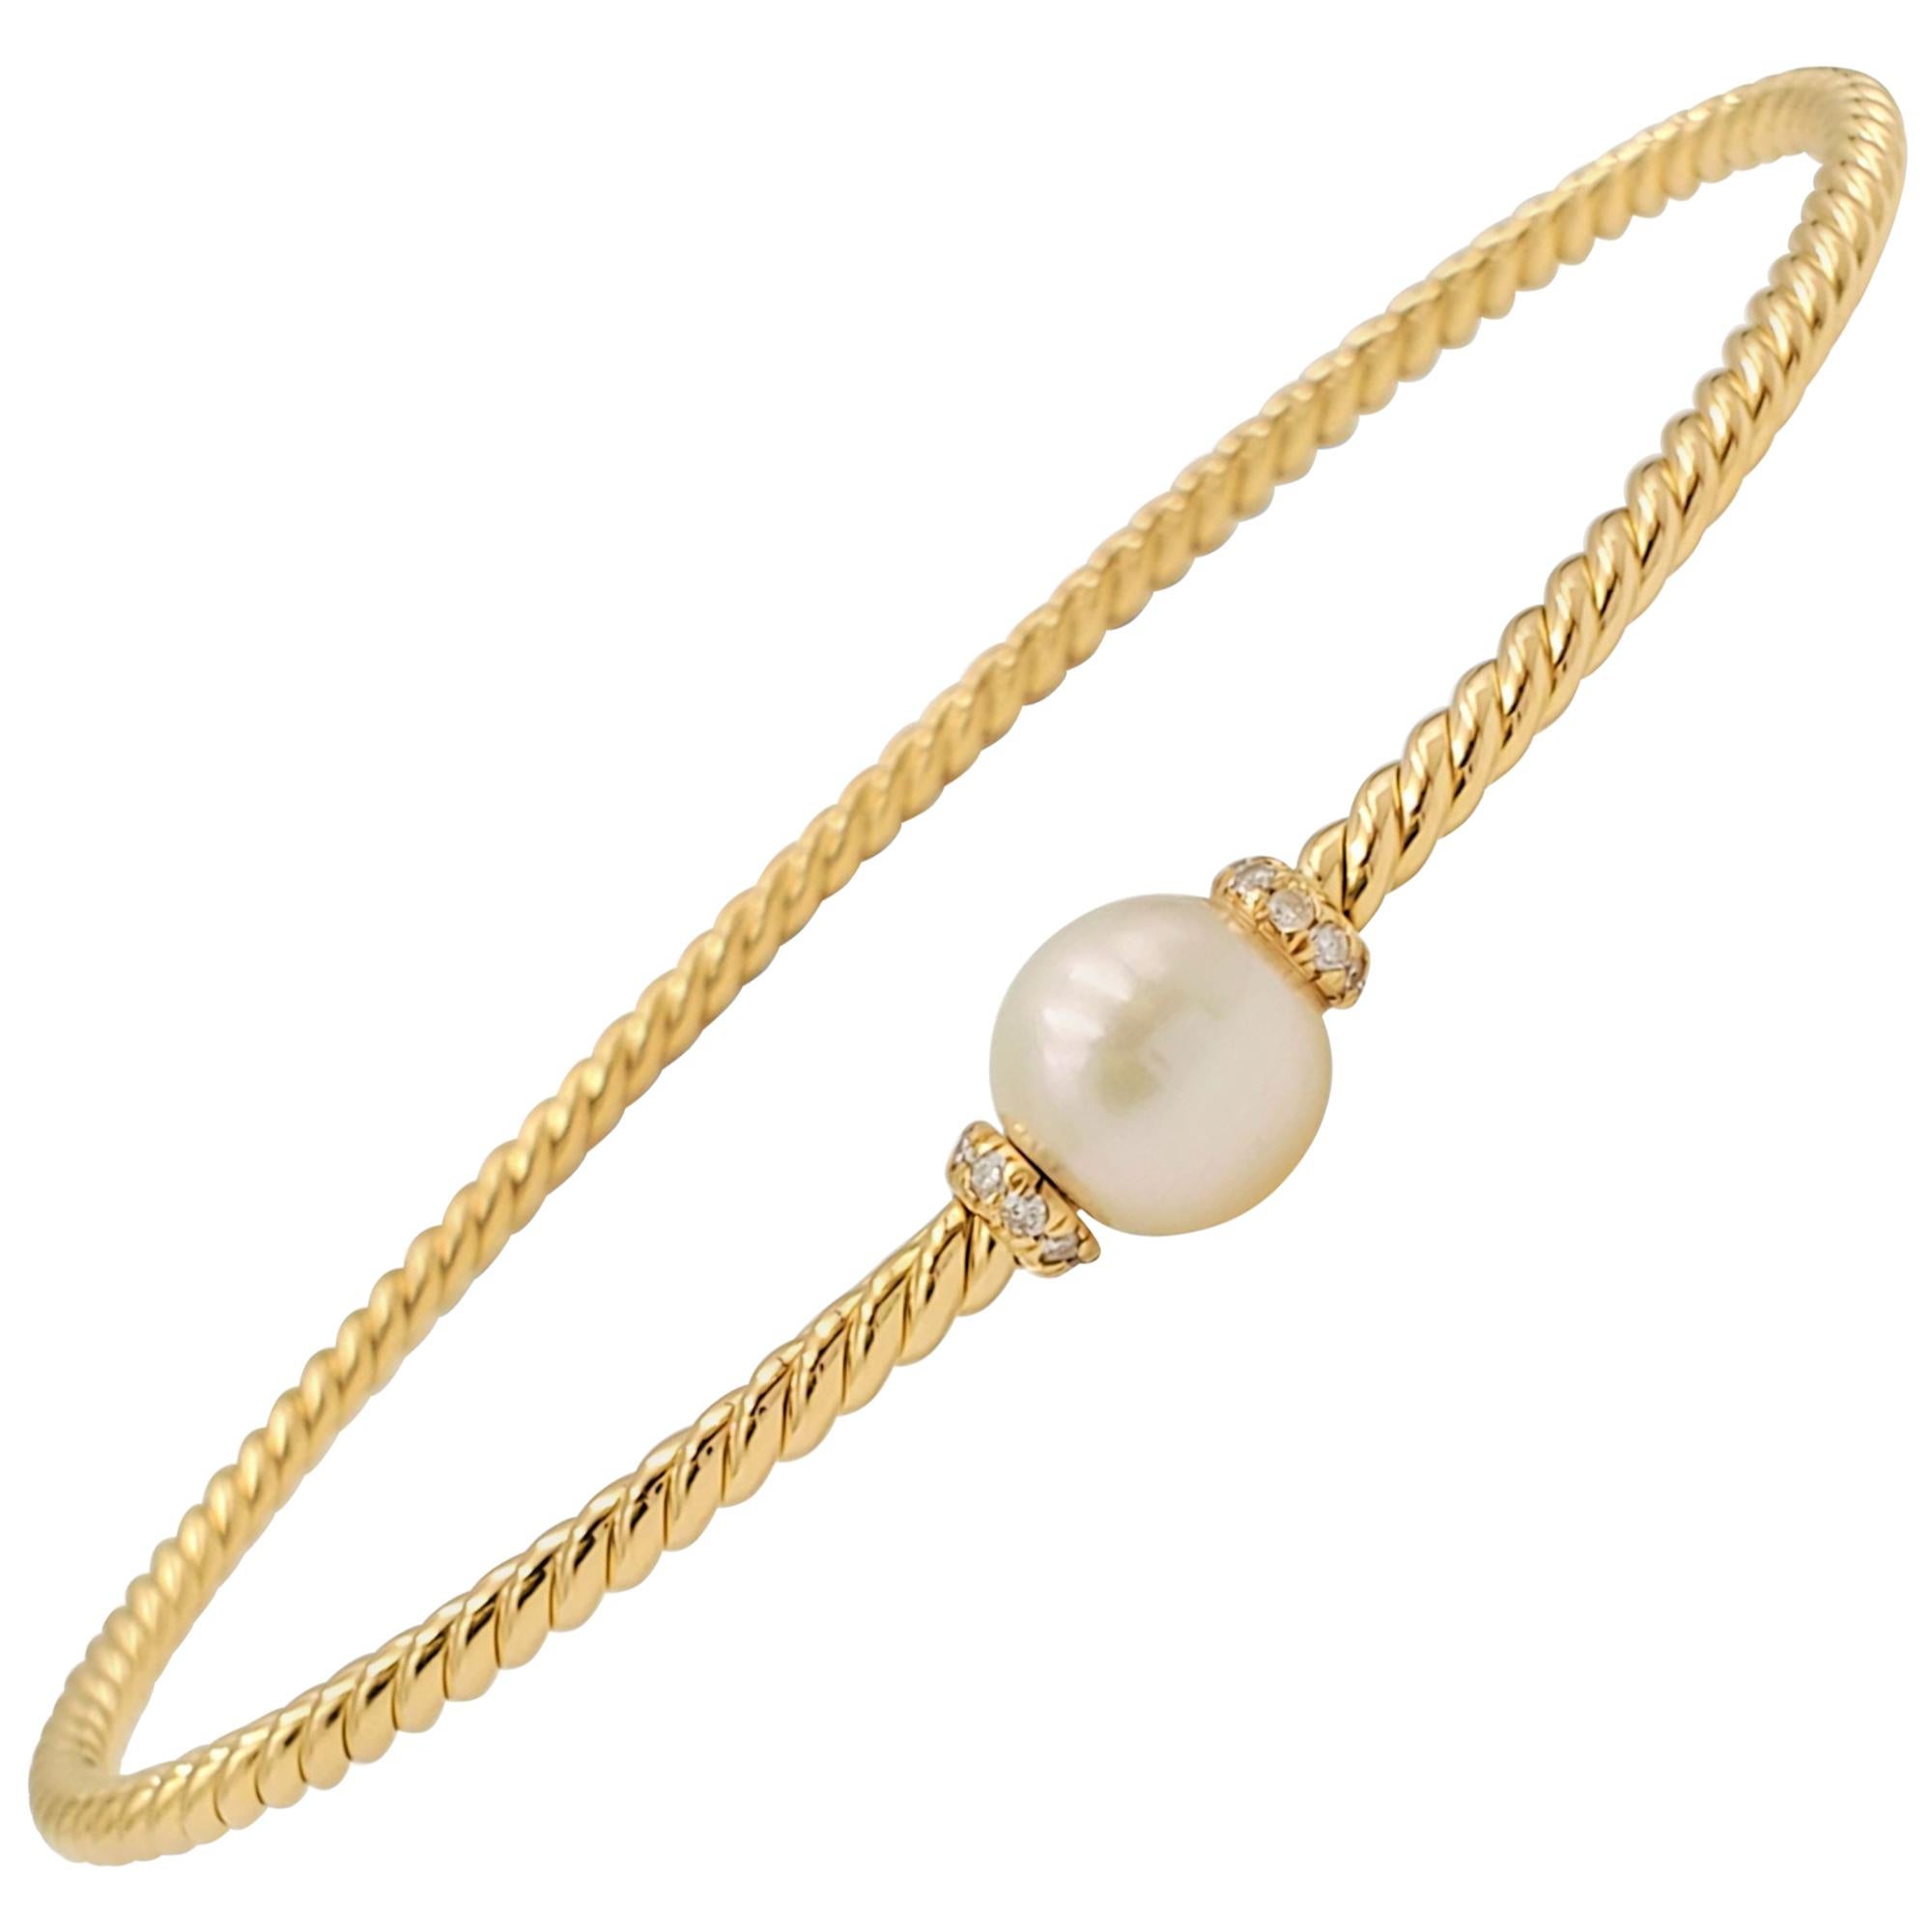 David Yurman 'Petite Solari' Station Bracelet with Cultured Pearl and Diamonds